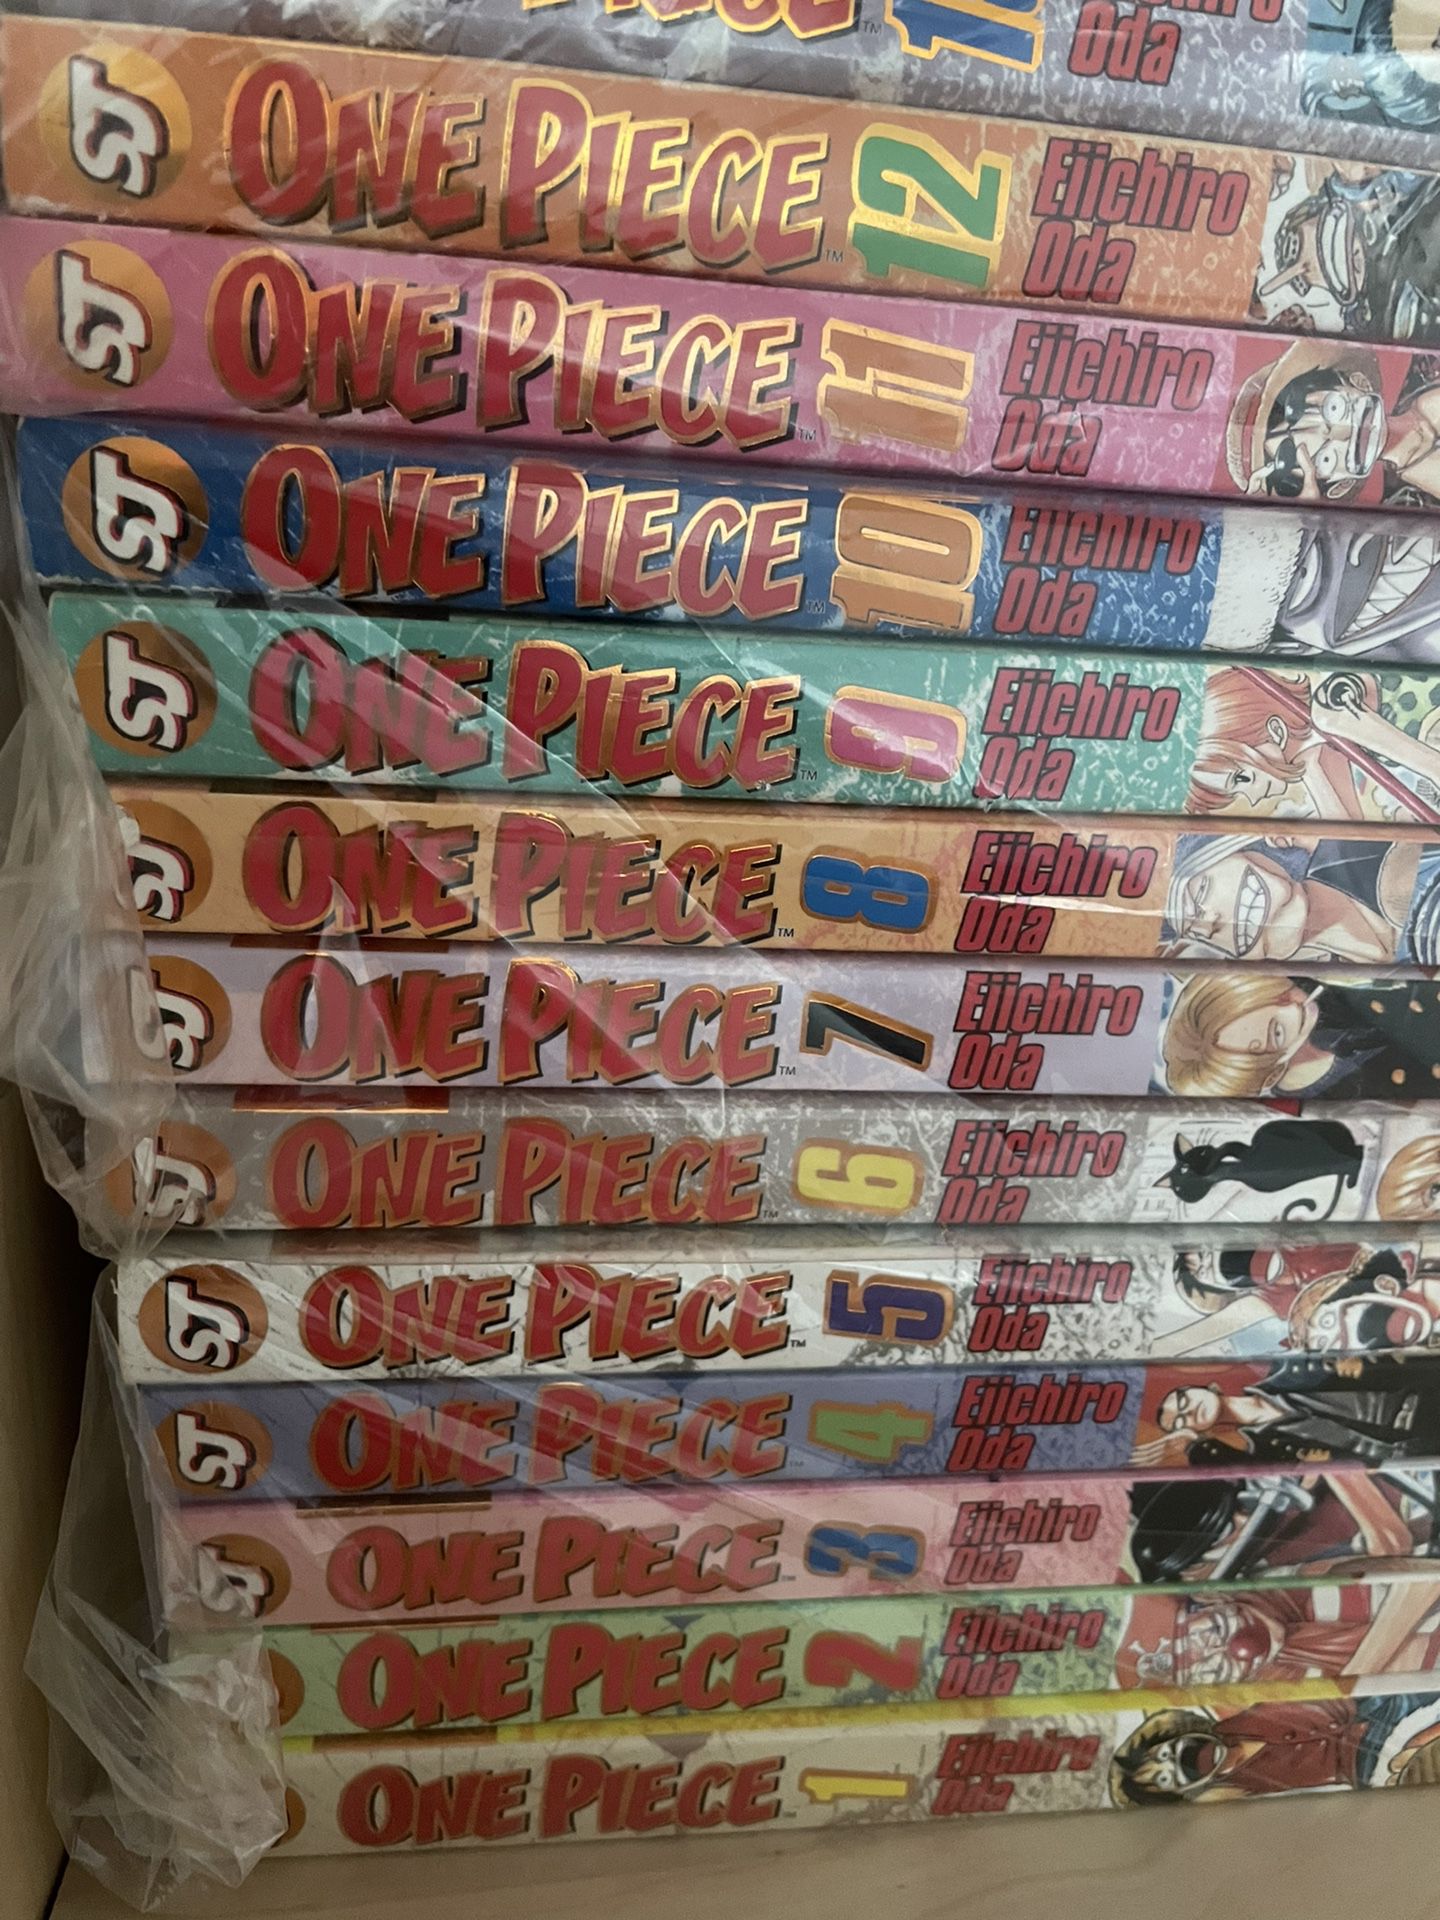 Ajin Manga Vol 1-6 for Sale in Ontario, CA - OfferUp